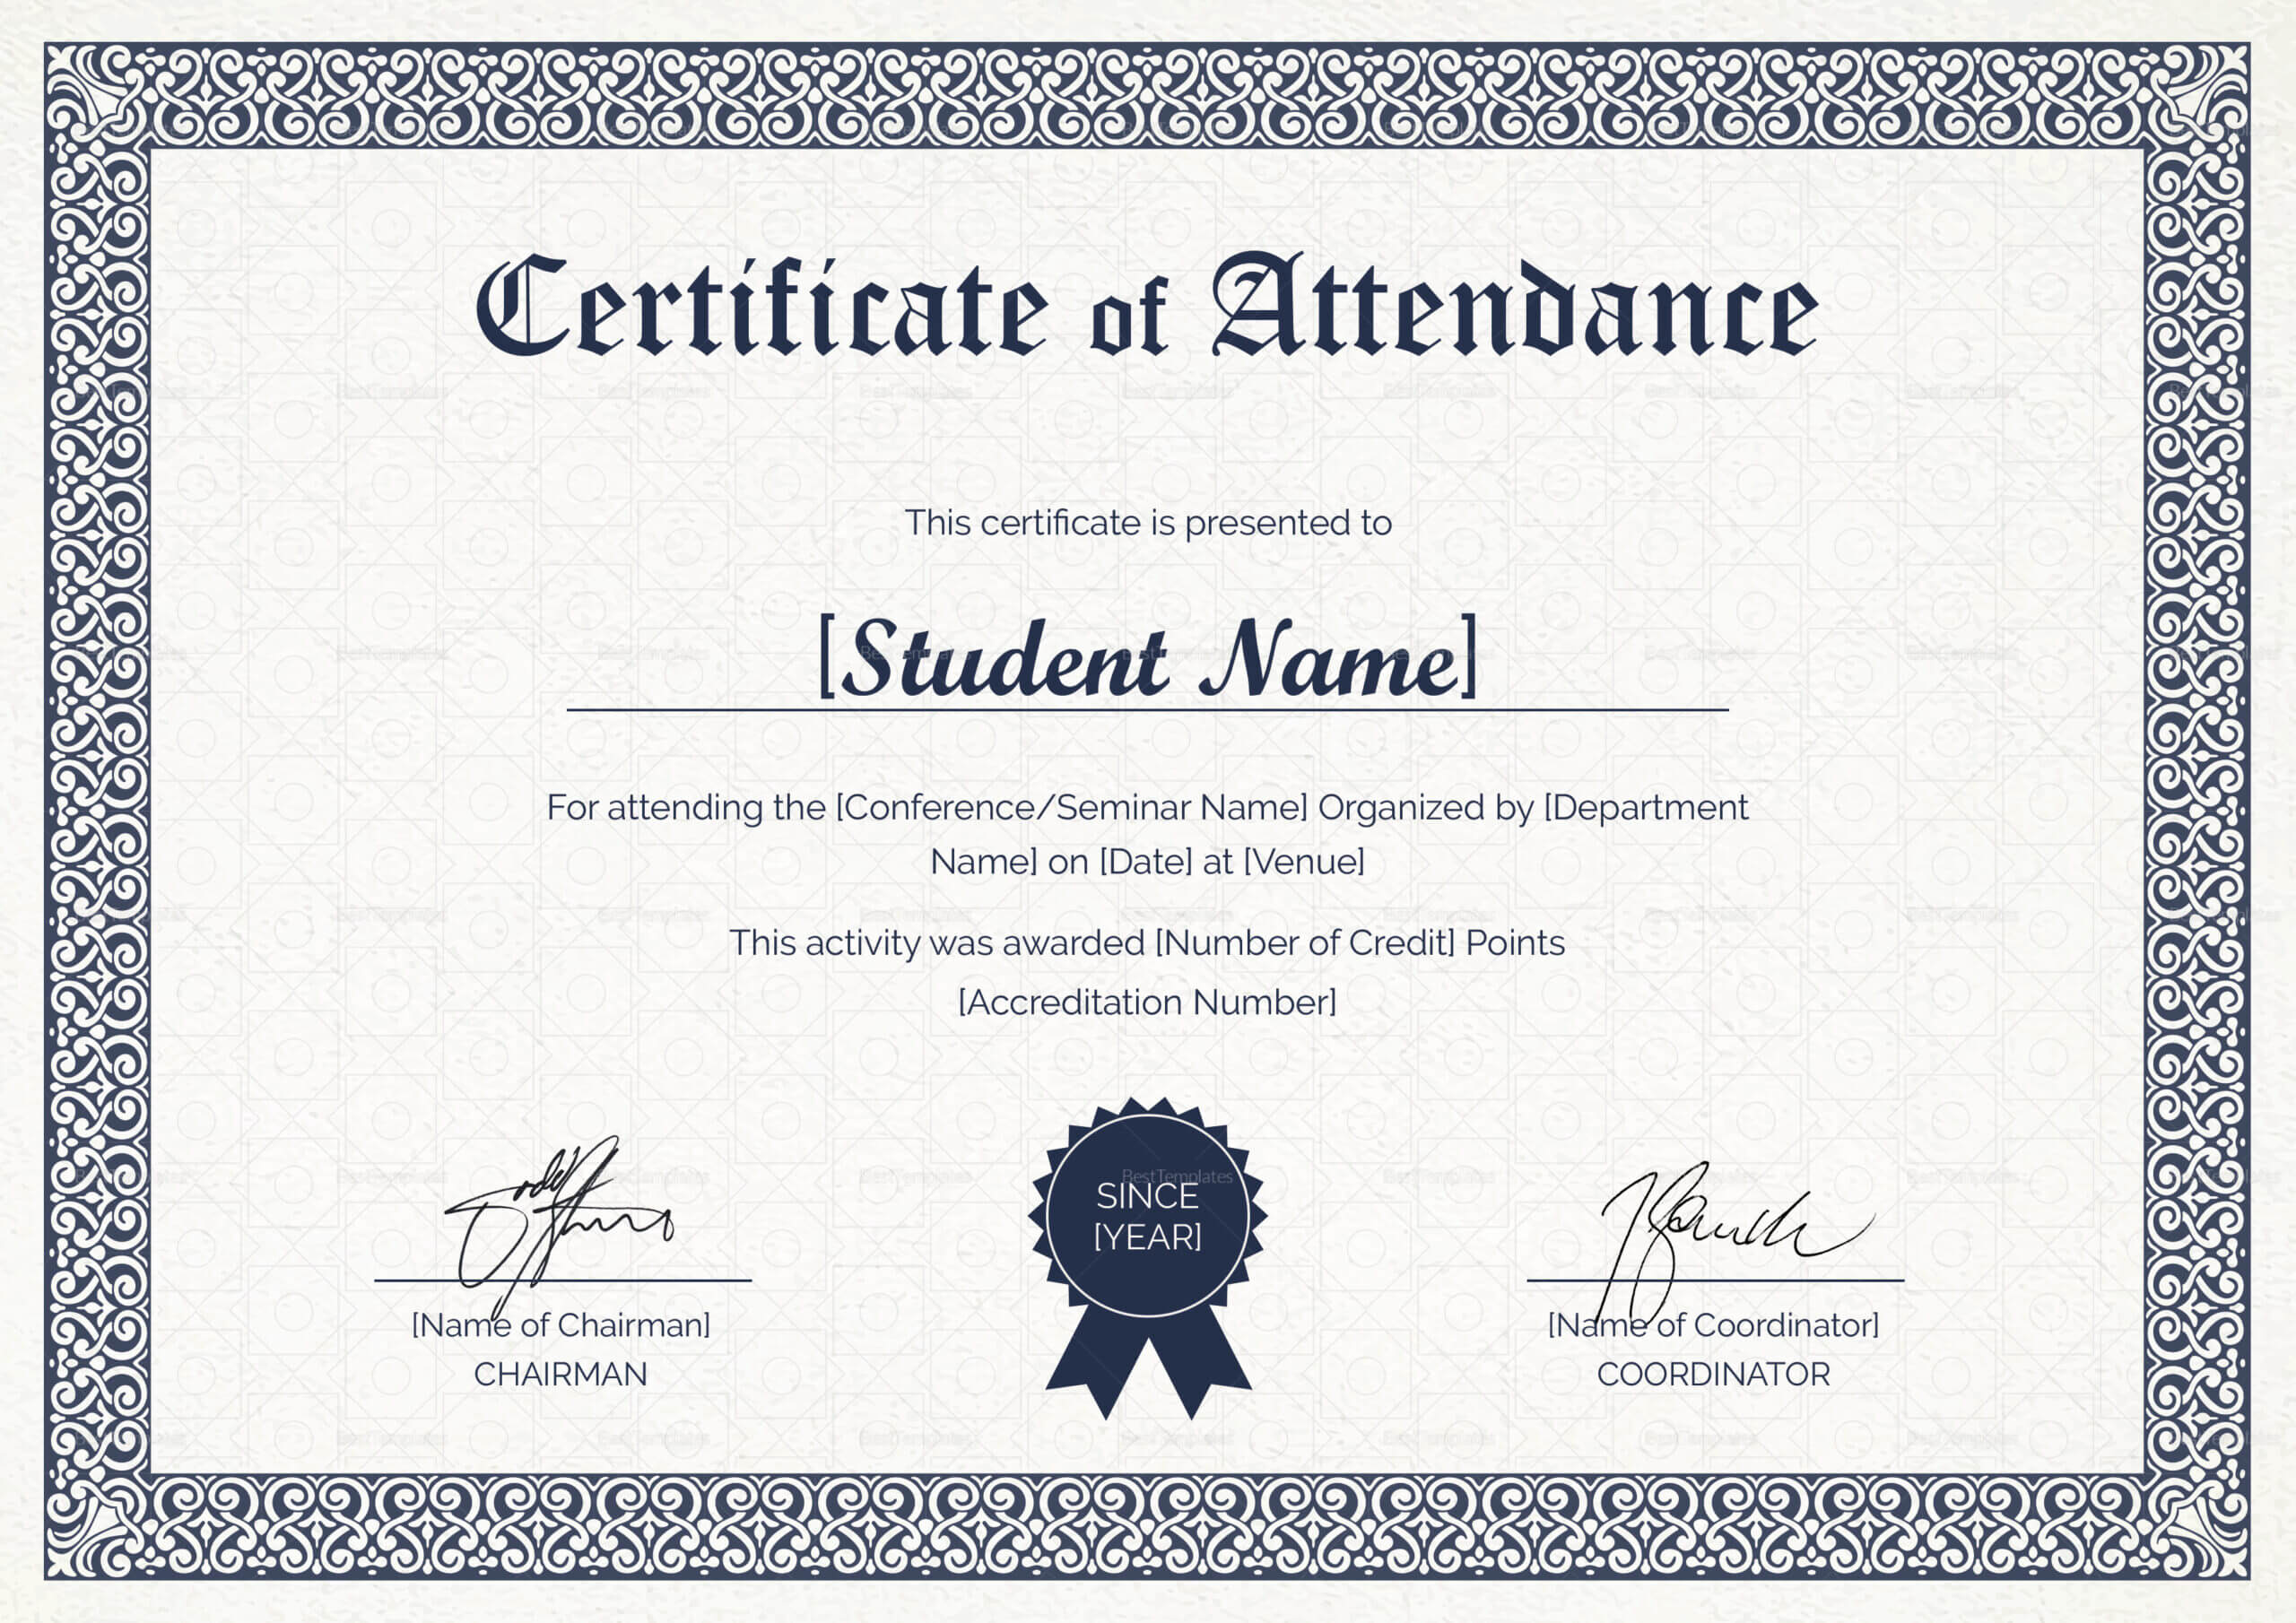 Students Attendance Certificate Template Intended For Certificate Of Attendance Conference Template